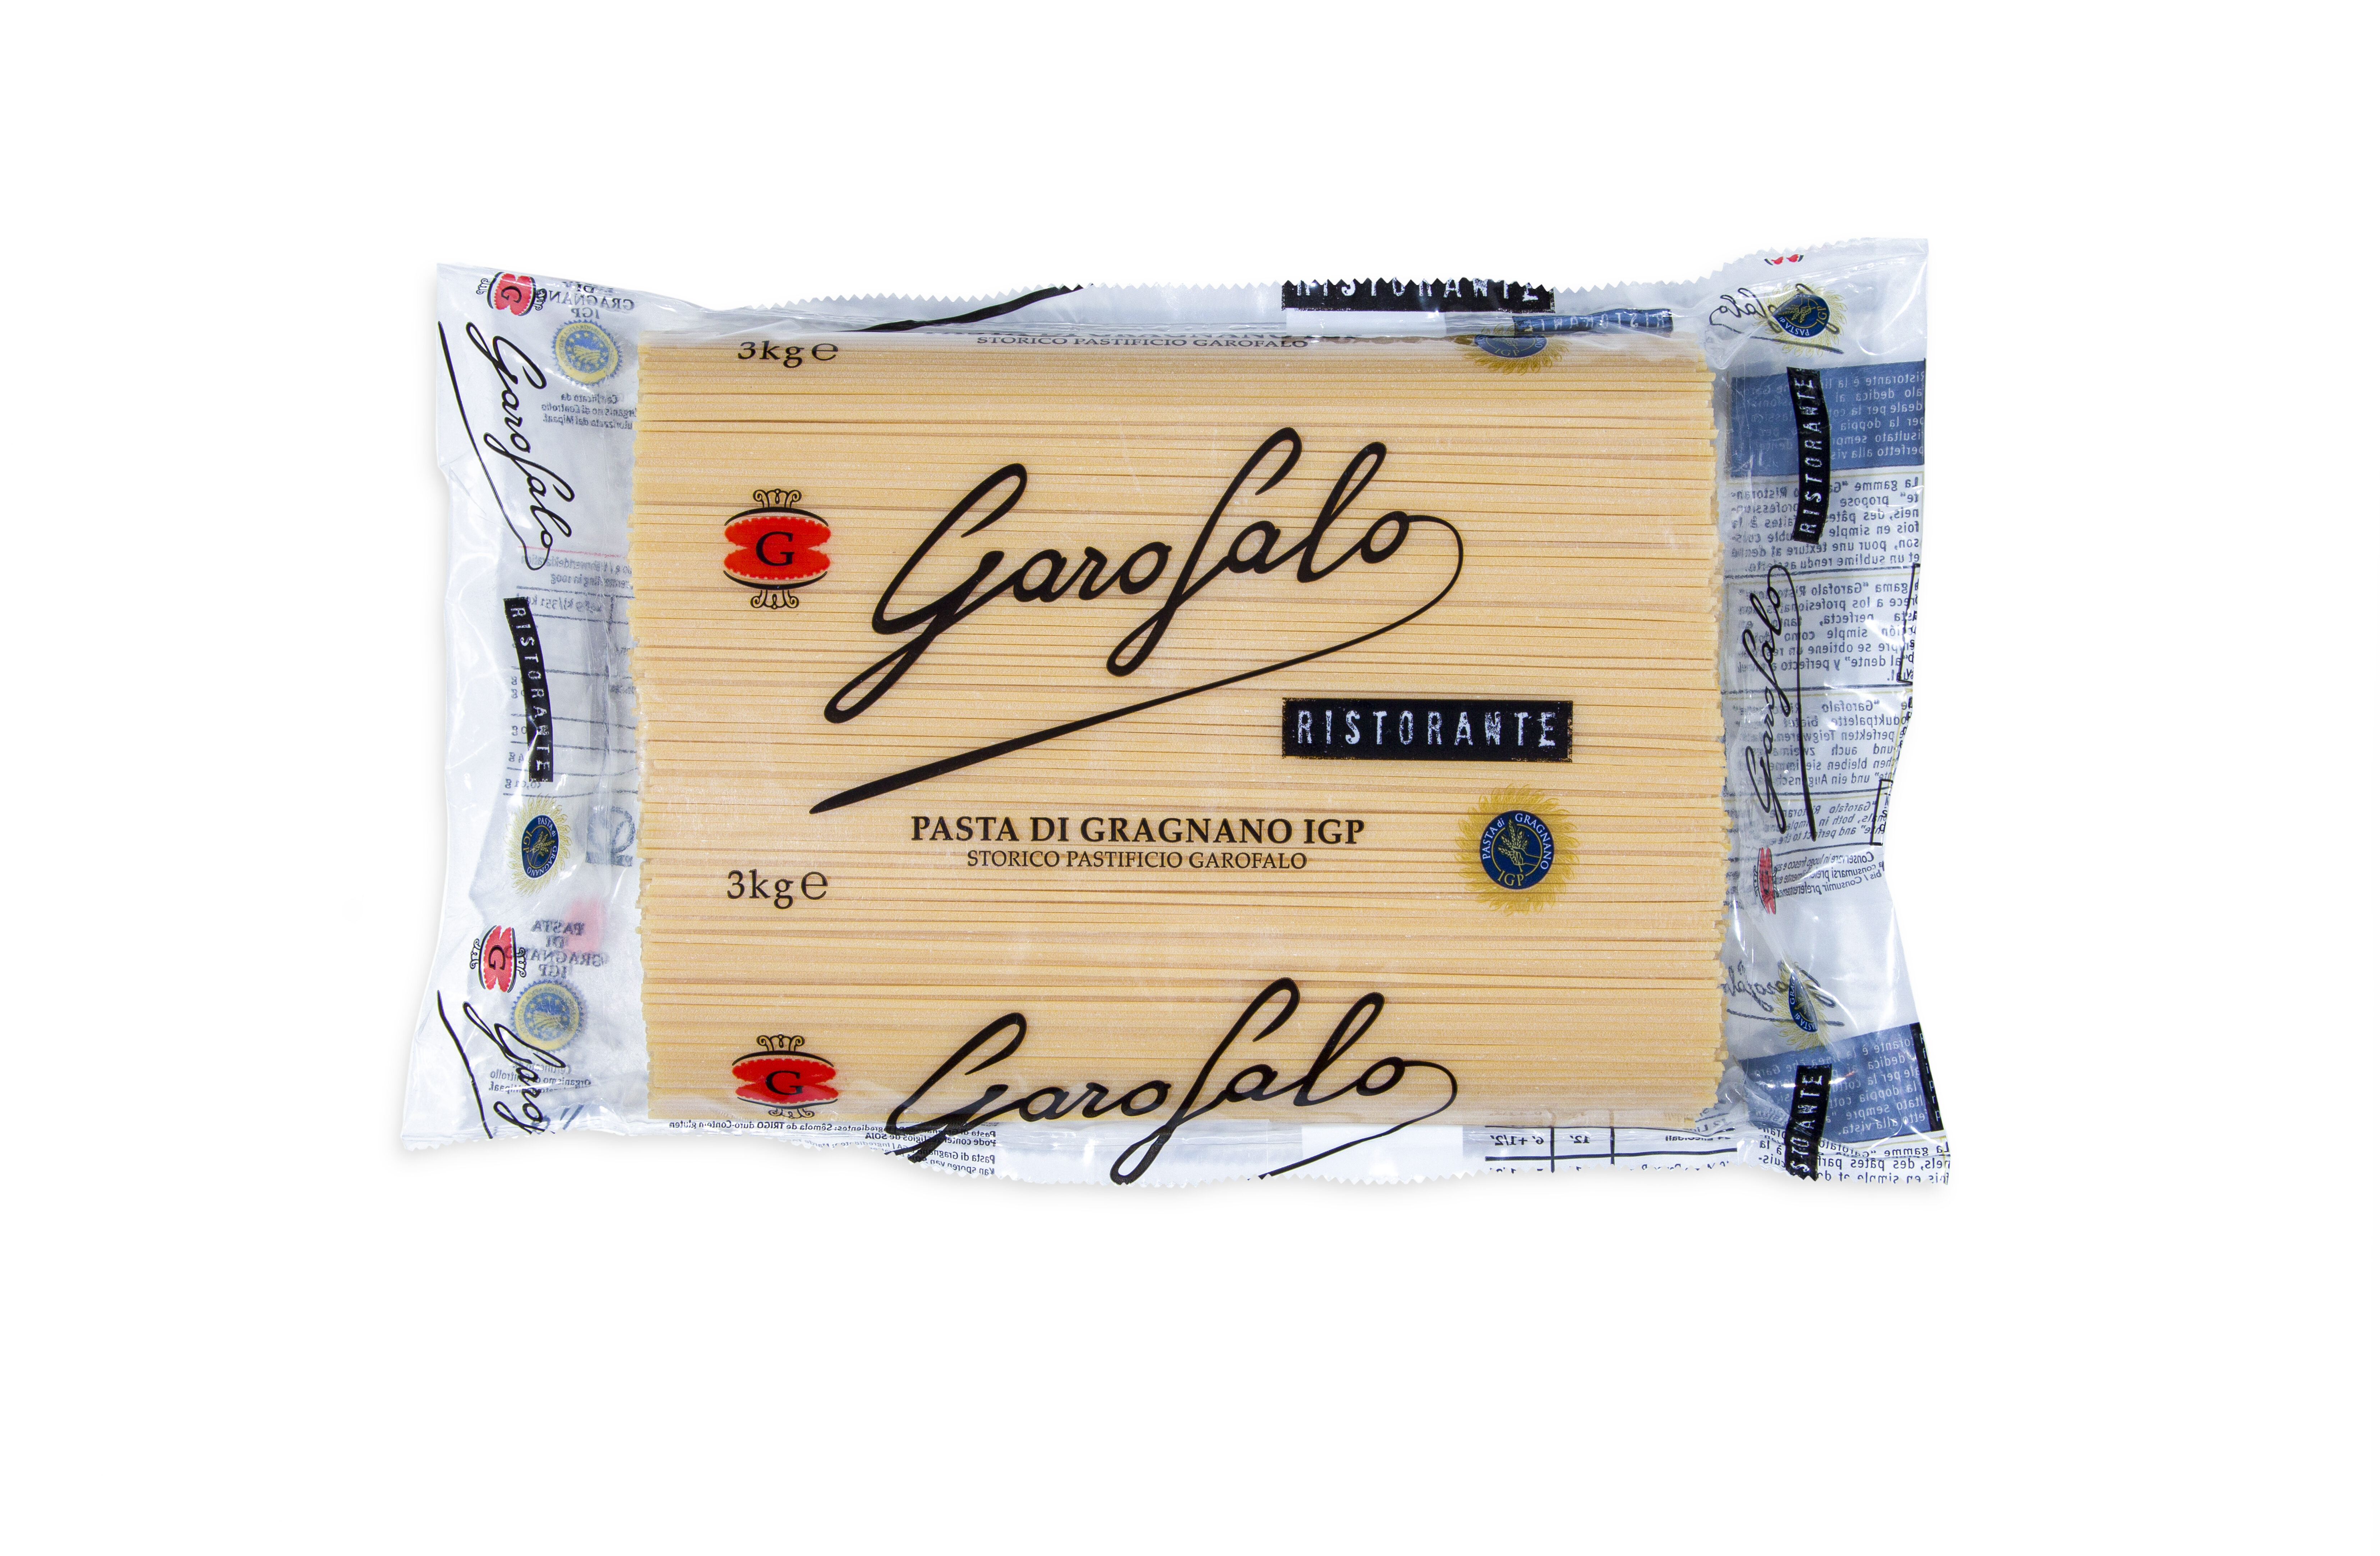 Garofalo ristorante spaghetti 3kg - Produkt - fr